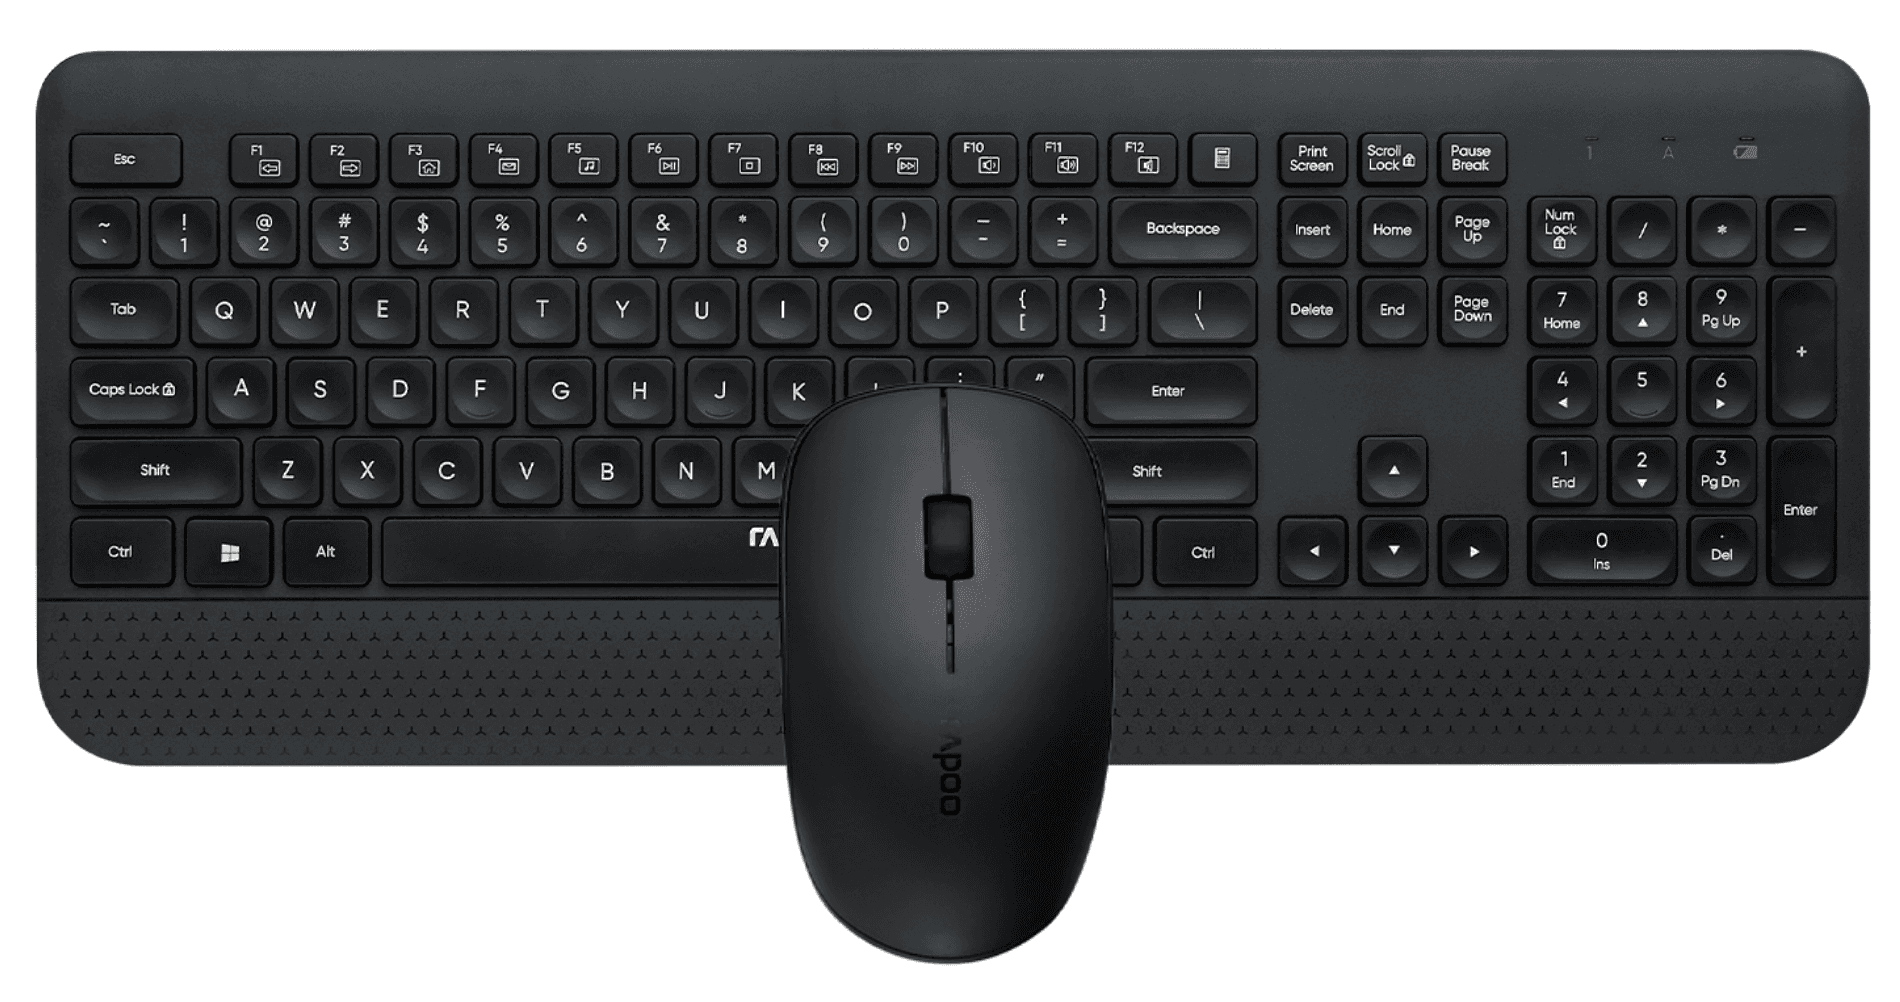 Rapoo X3500 optical mouse and keyboard combo set price nepal